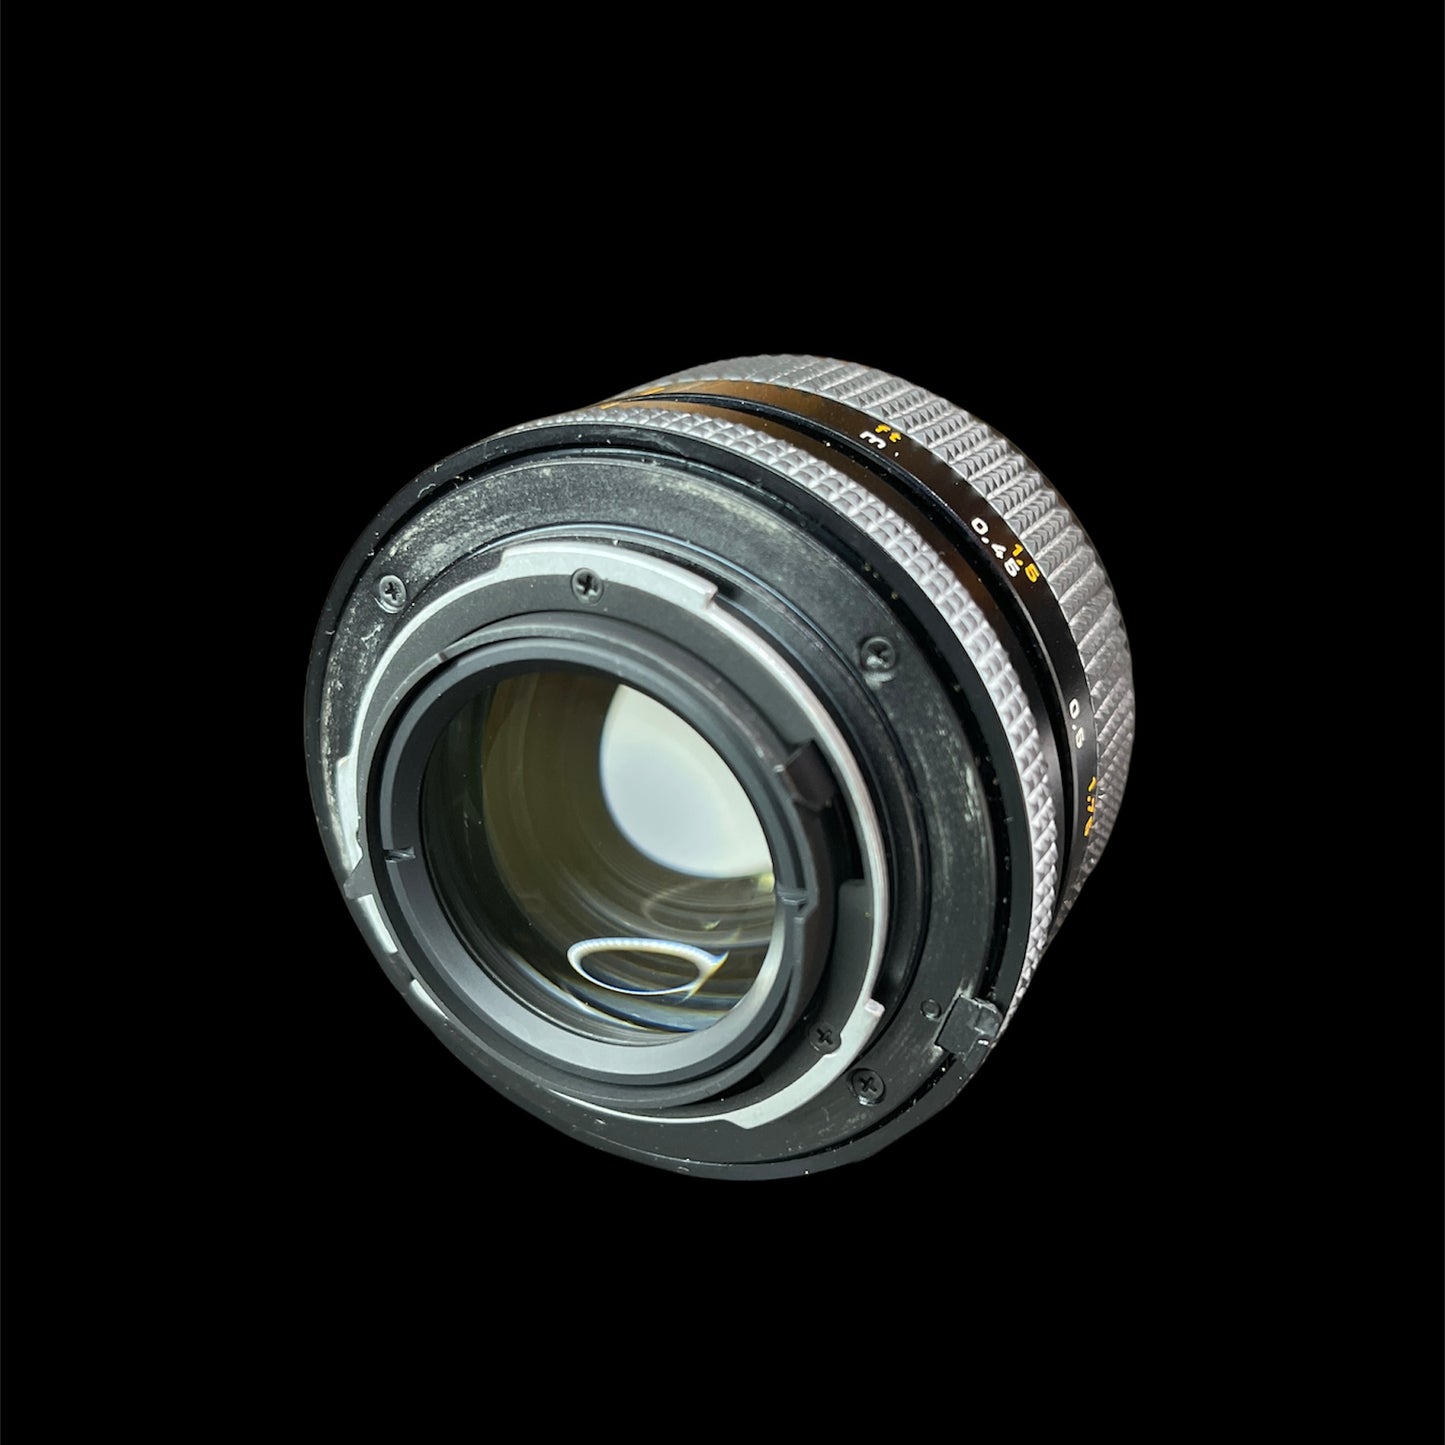 Contax Carl Zeiss Planar 50mm f/1.4